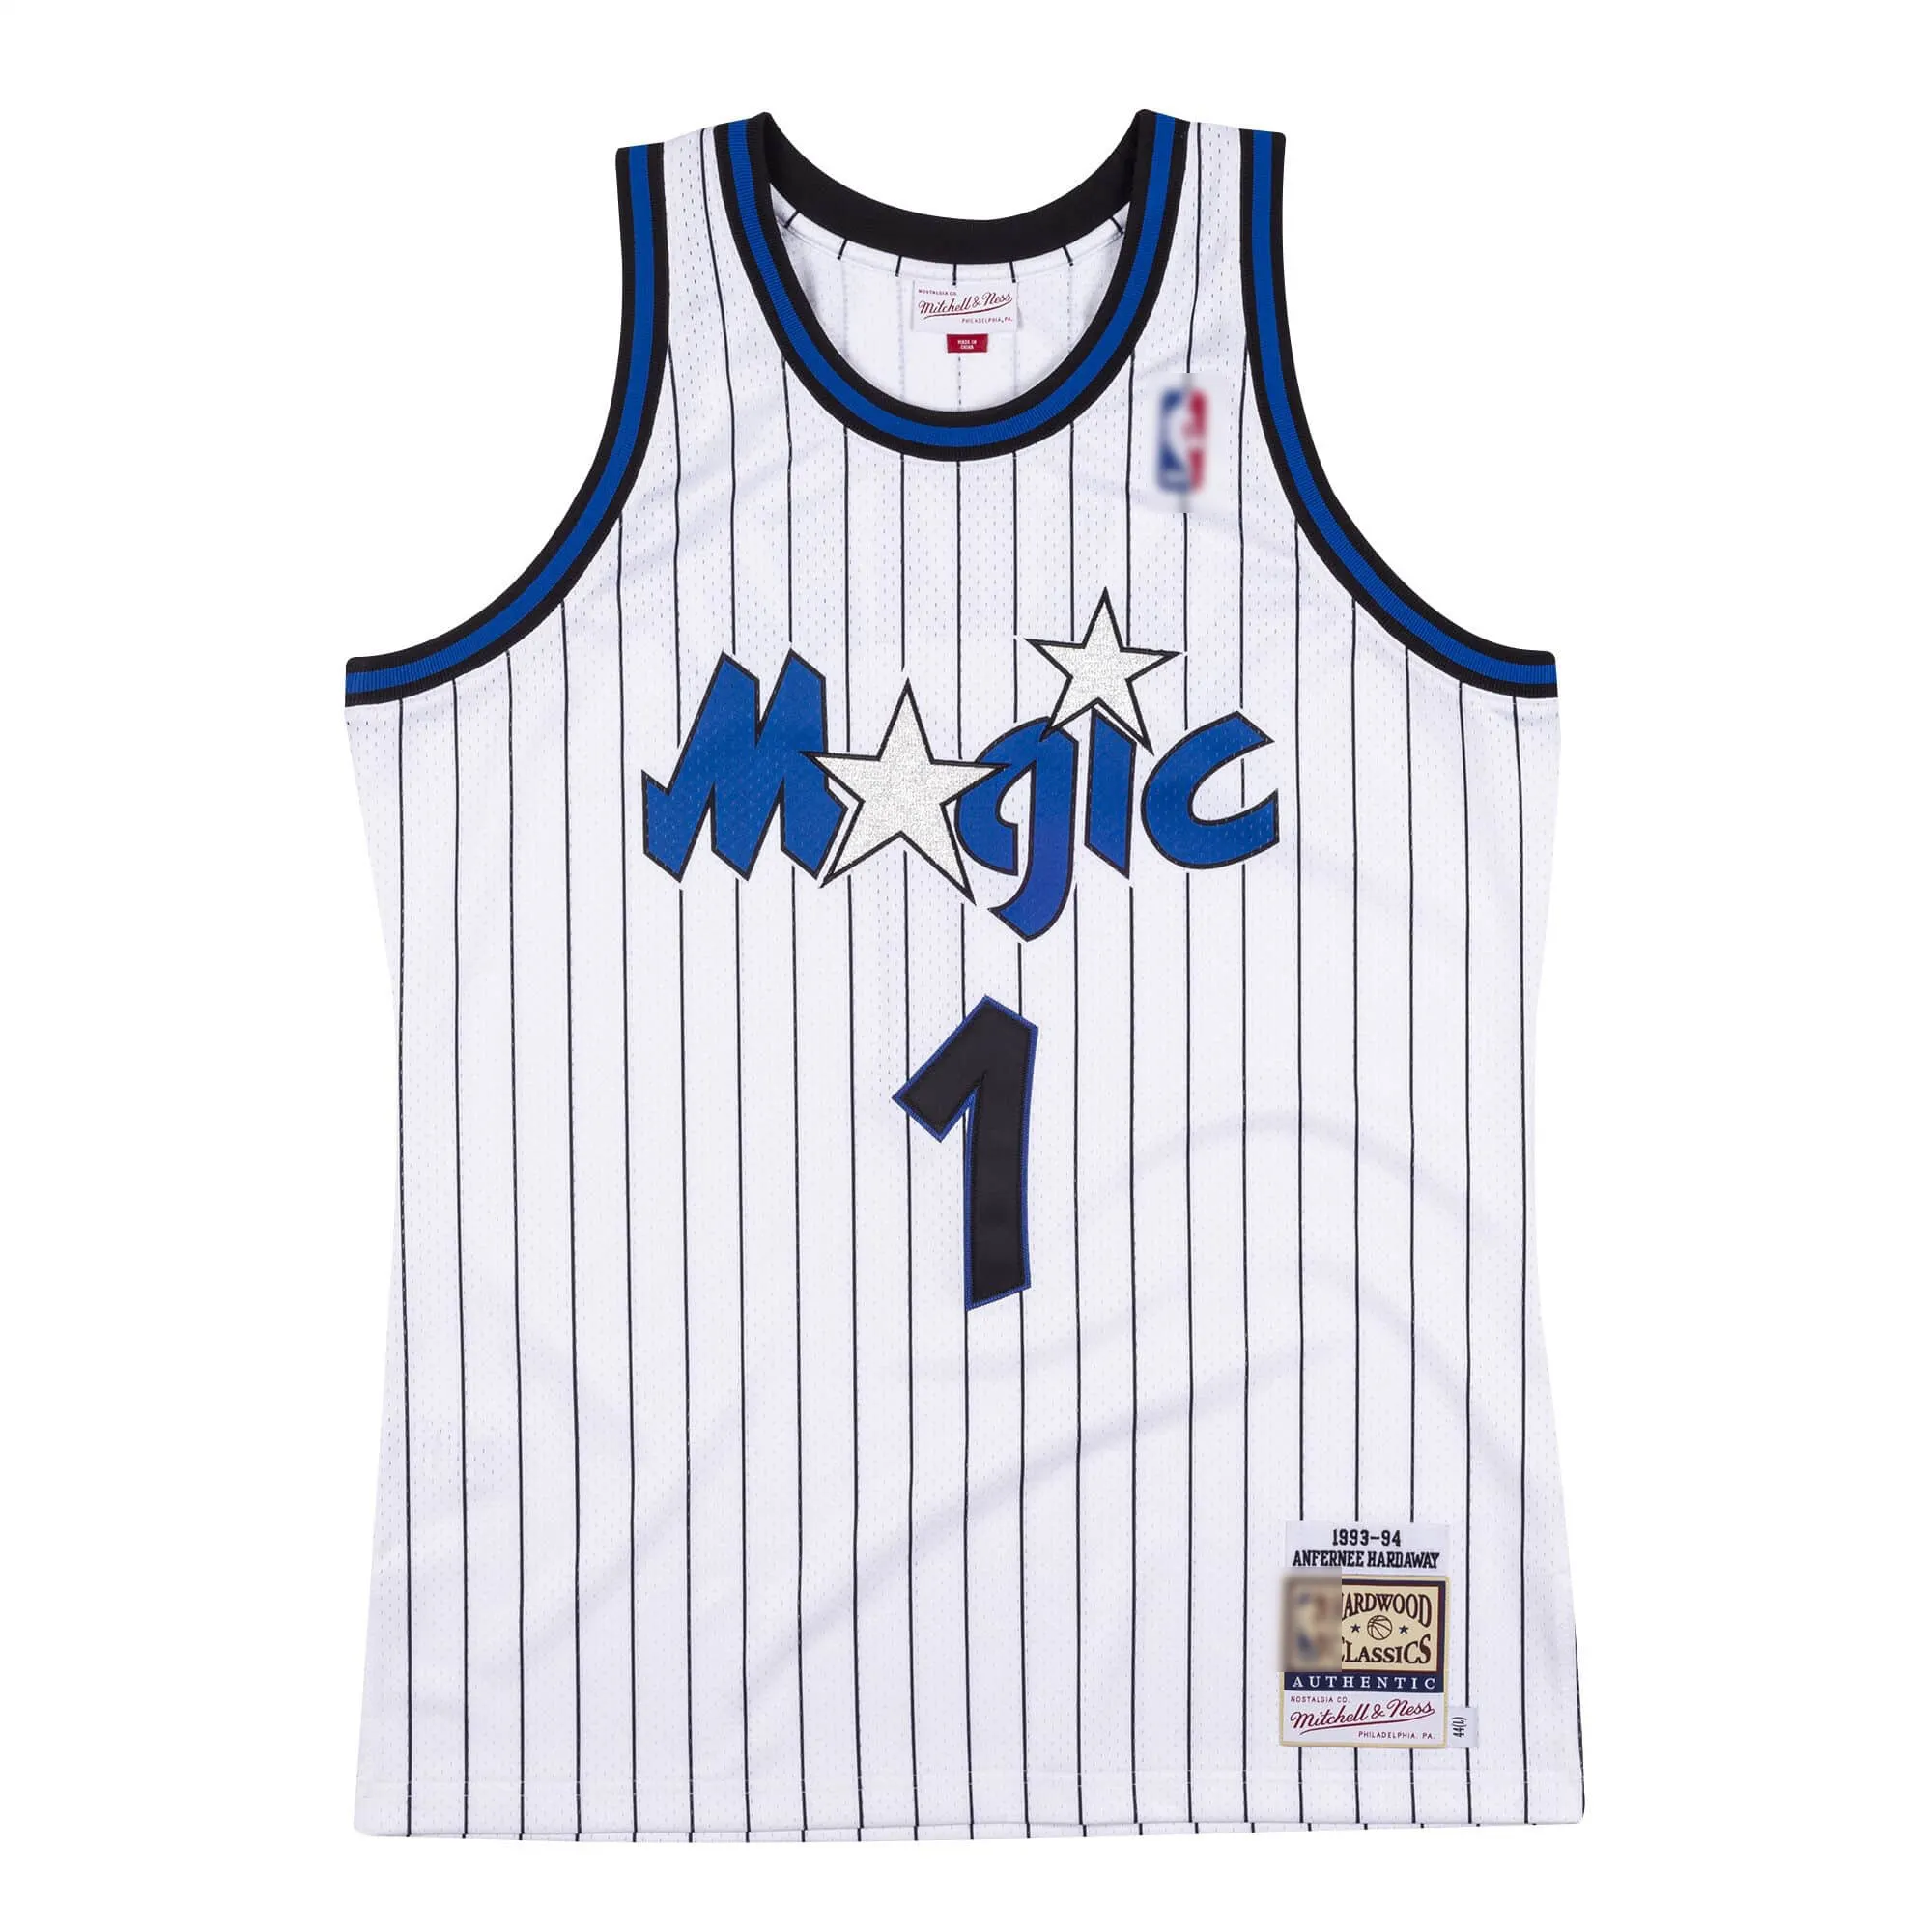 Authentic Jersey Orlando Magic 1993-94 Anfernee Hardaway mens basketball uniforms mitchell retro basketball jersey